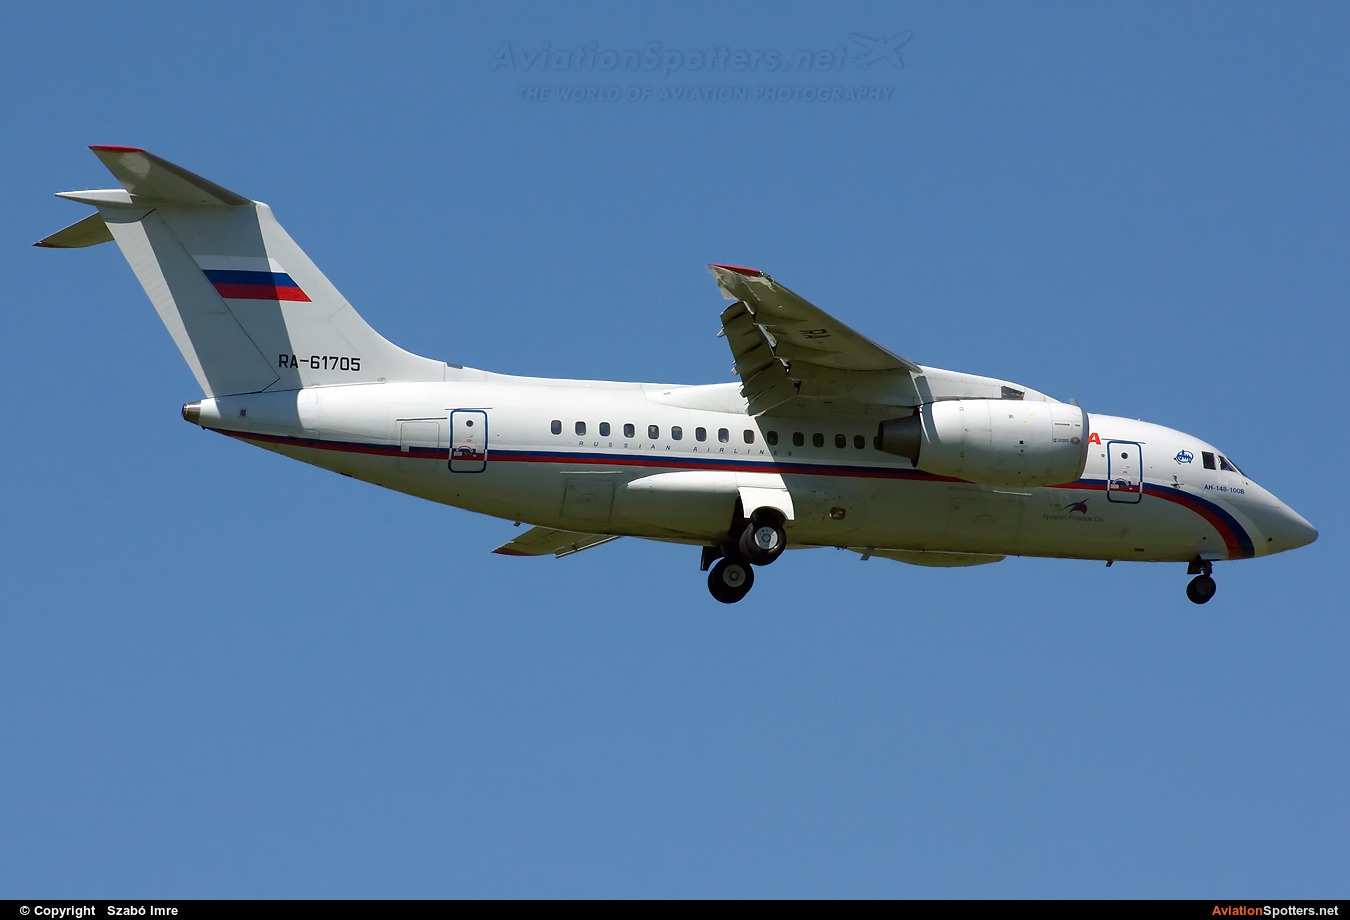 Rossiya Airlines  -  An-148  (RA-61705) By Szabó Imre (SzImre71)